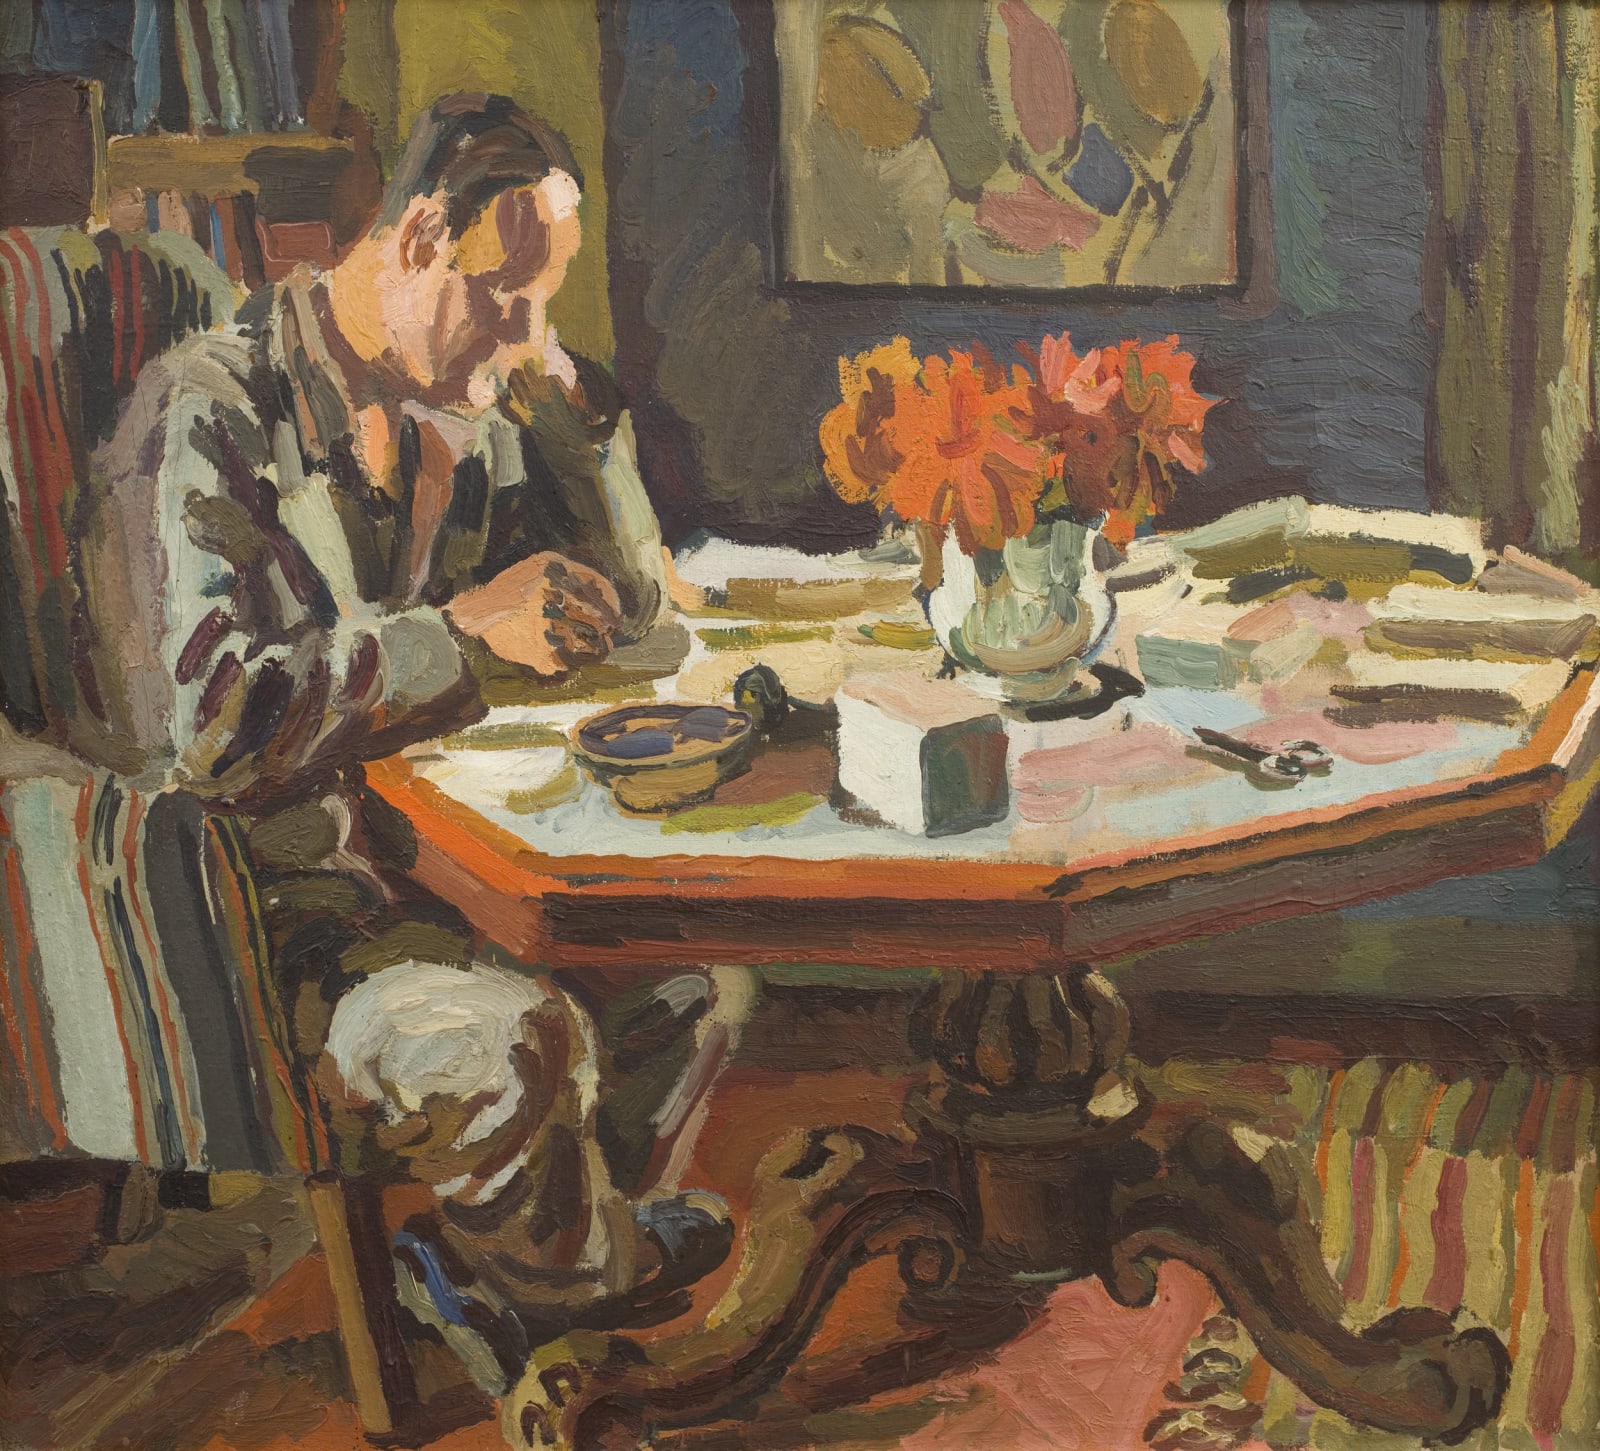 Duncan Grant, Angus Davidson at Charleston, 1923-28, c.